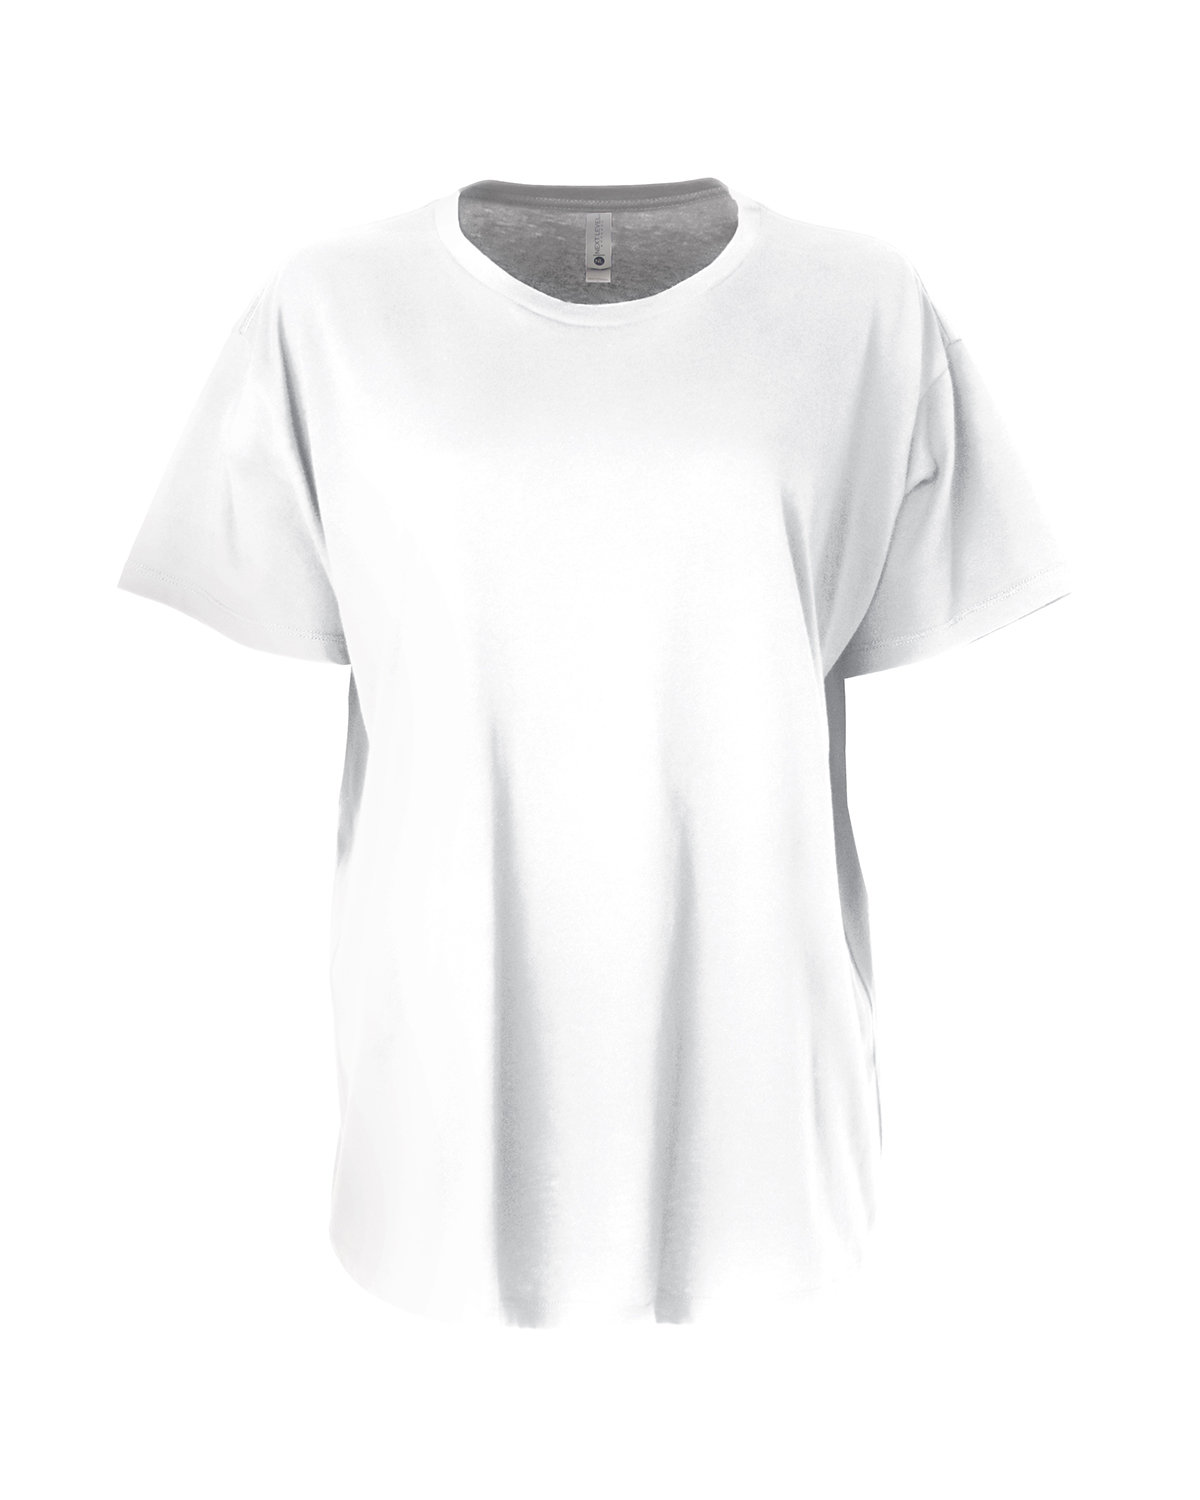 Next Level Apparel Ladies' Ideal Flow T-Shirt | alphabroder